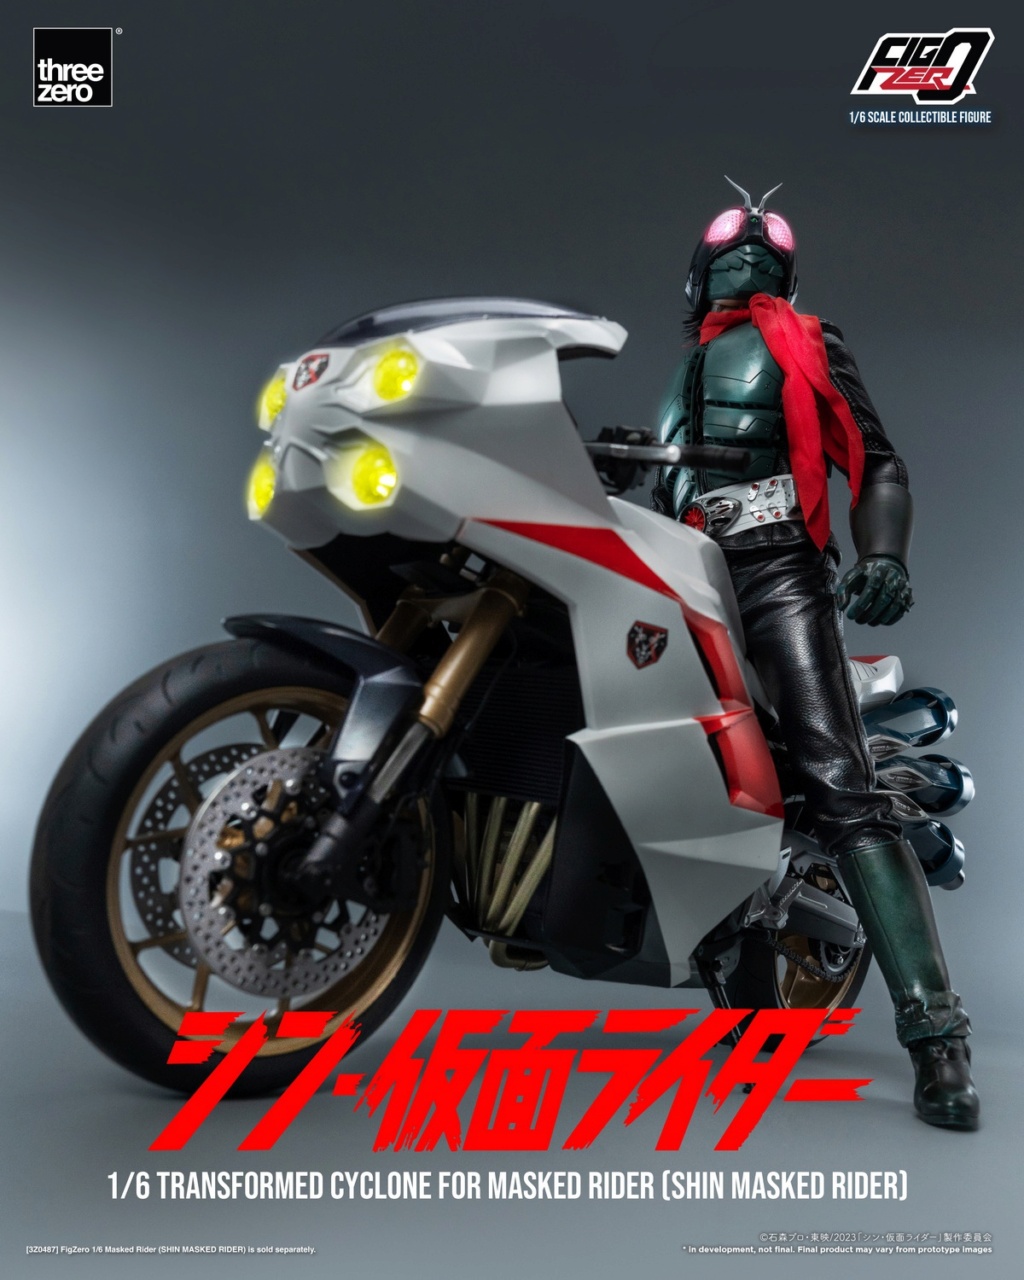 NEW PRODUCT: Threezero: FigZero 1/6 Shin Masked Rider Motorcycle (Transformed Cyclone) 18374210